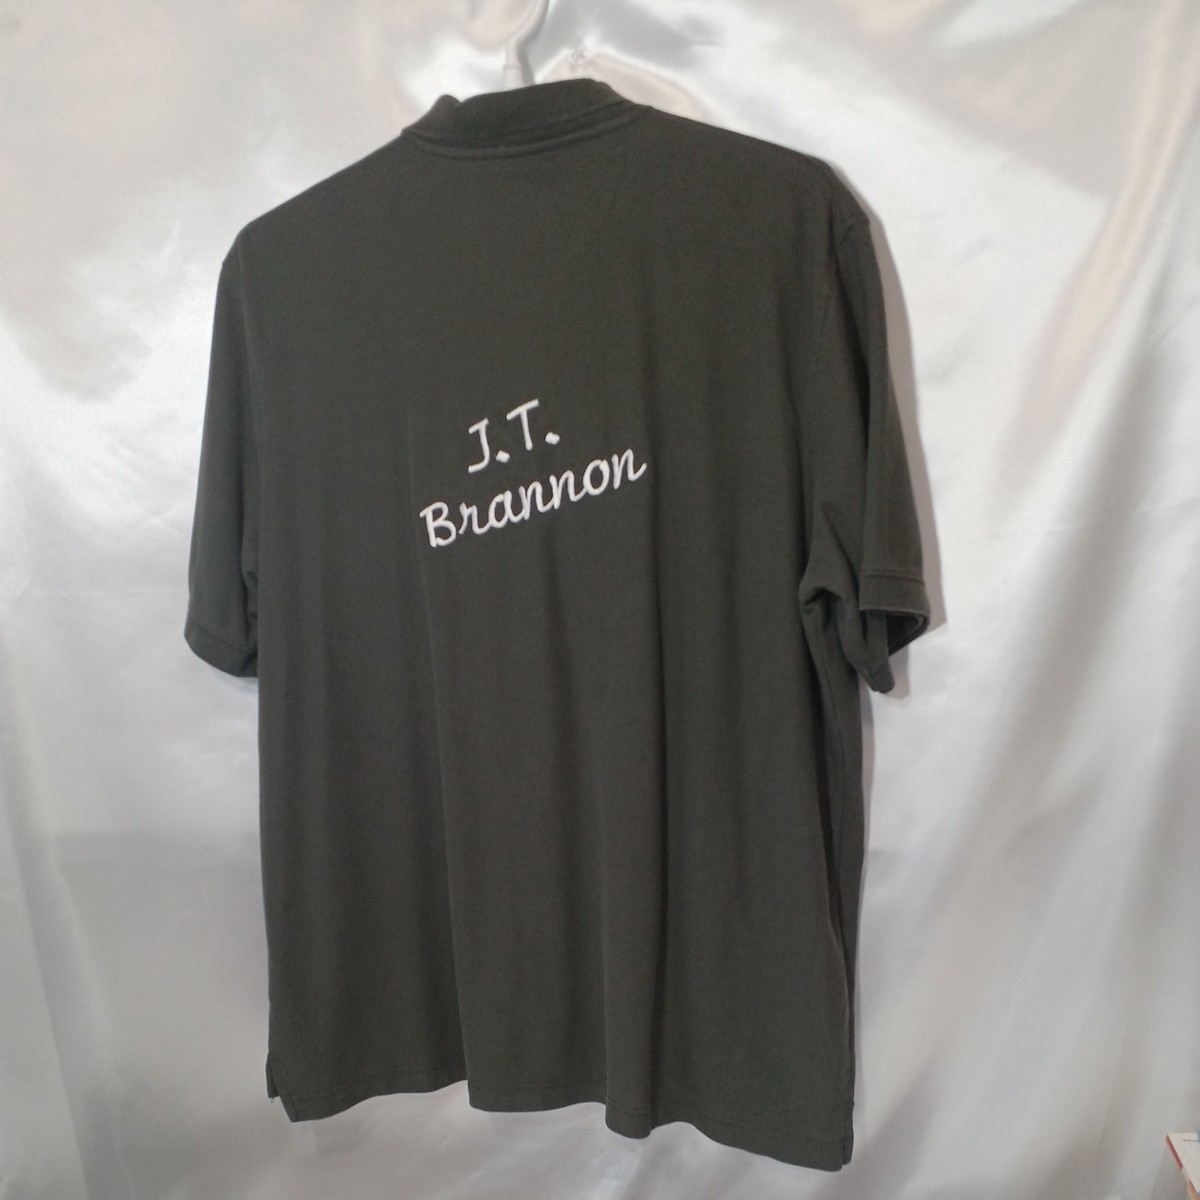 zcl-59♪アメリカユーズドbowling pro shopJ.T.Brannon背刺繍ネームポロシャツUS-XLサイズ(日本サイズ2XL相当)アーミーカラー_画像4